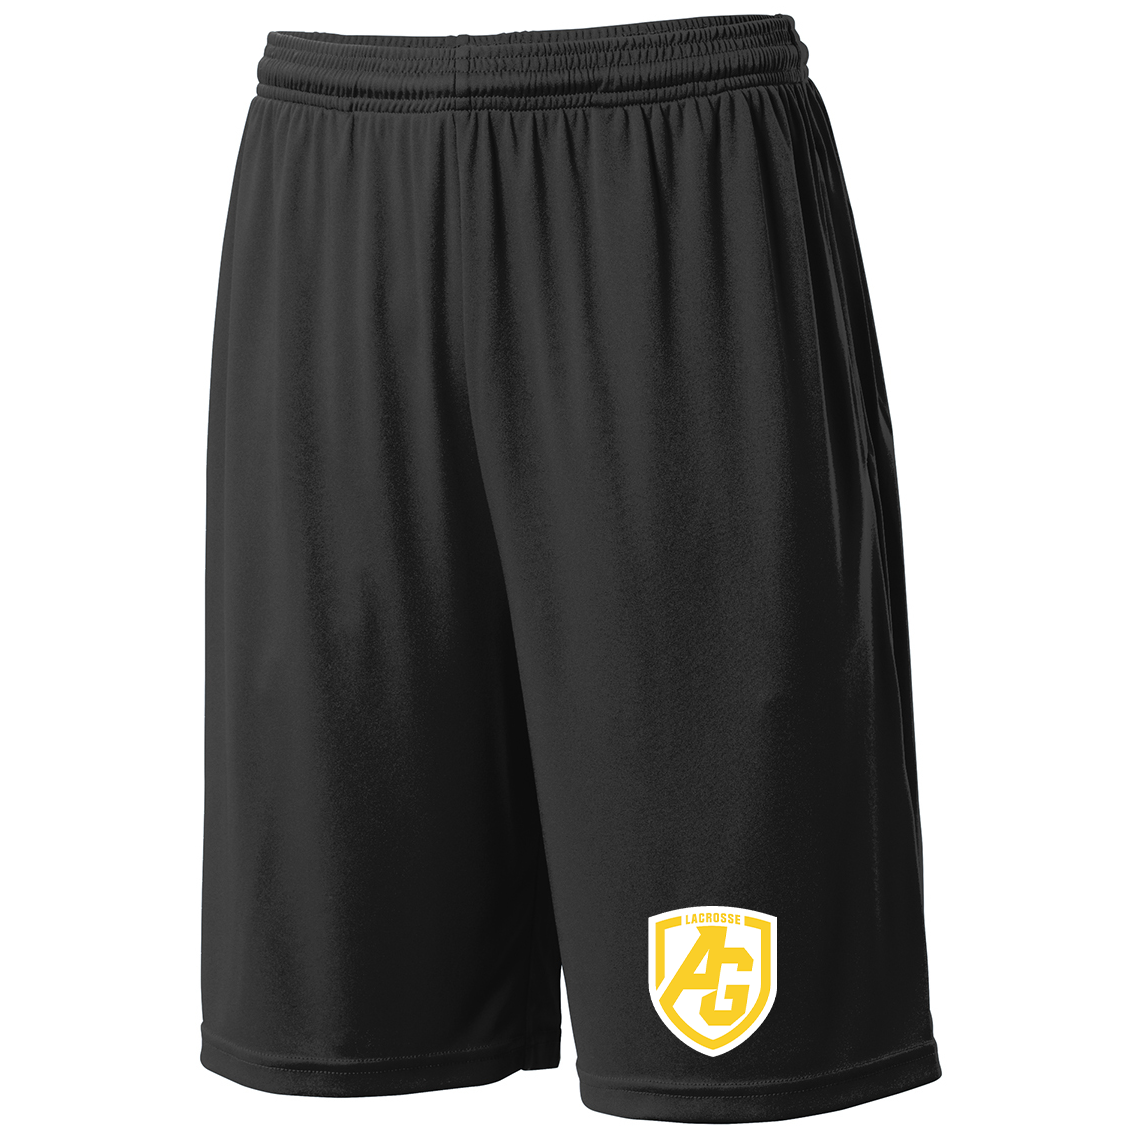 Avon Grove Lacrosse Shorts